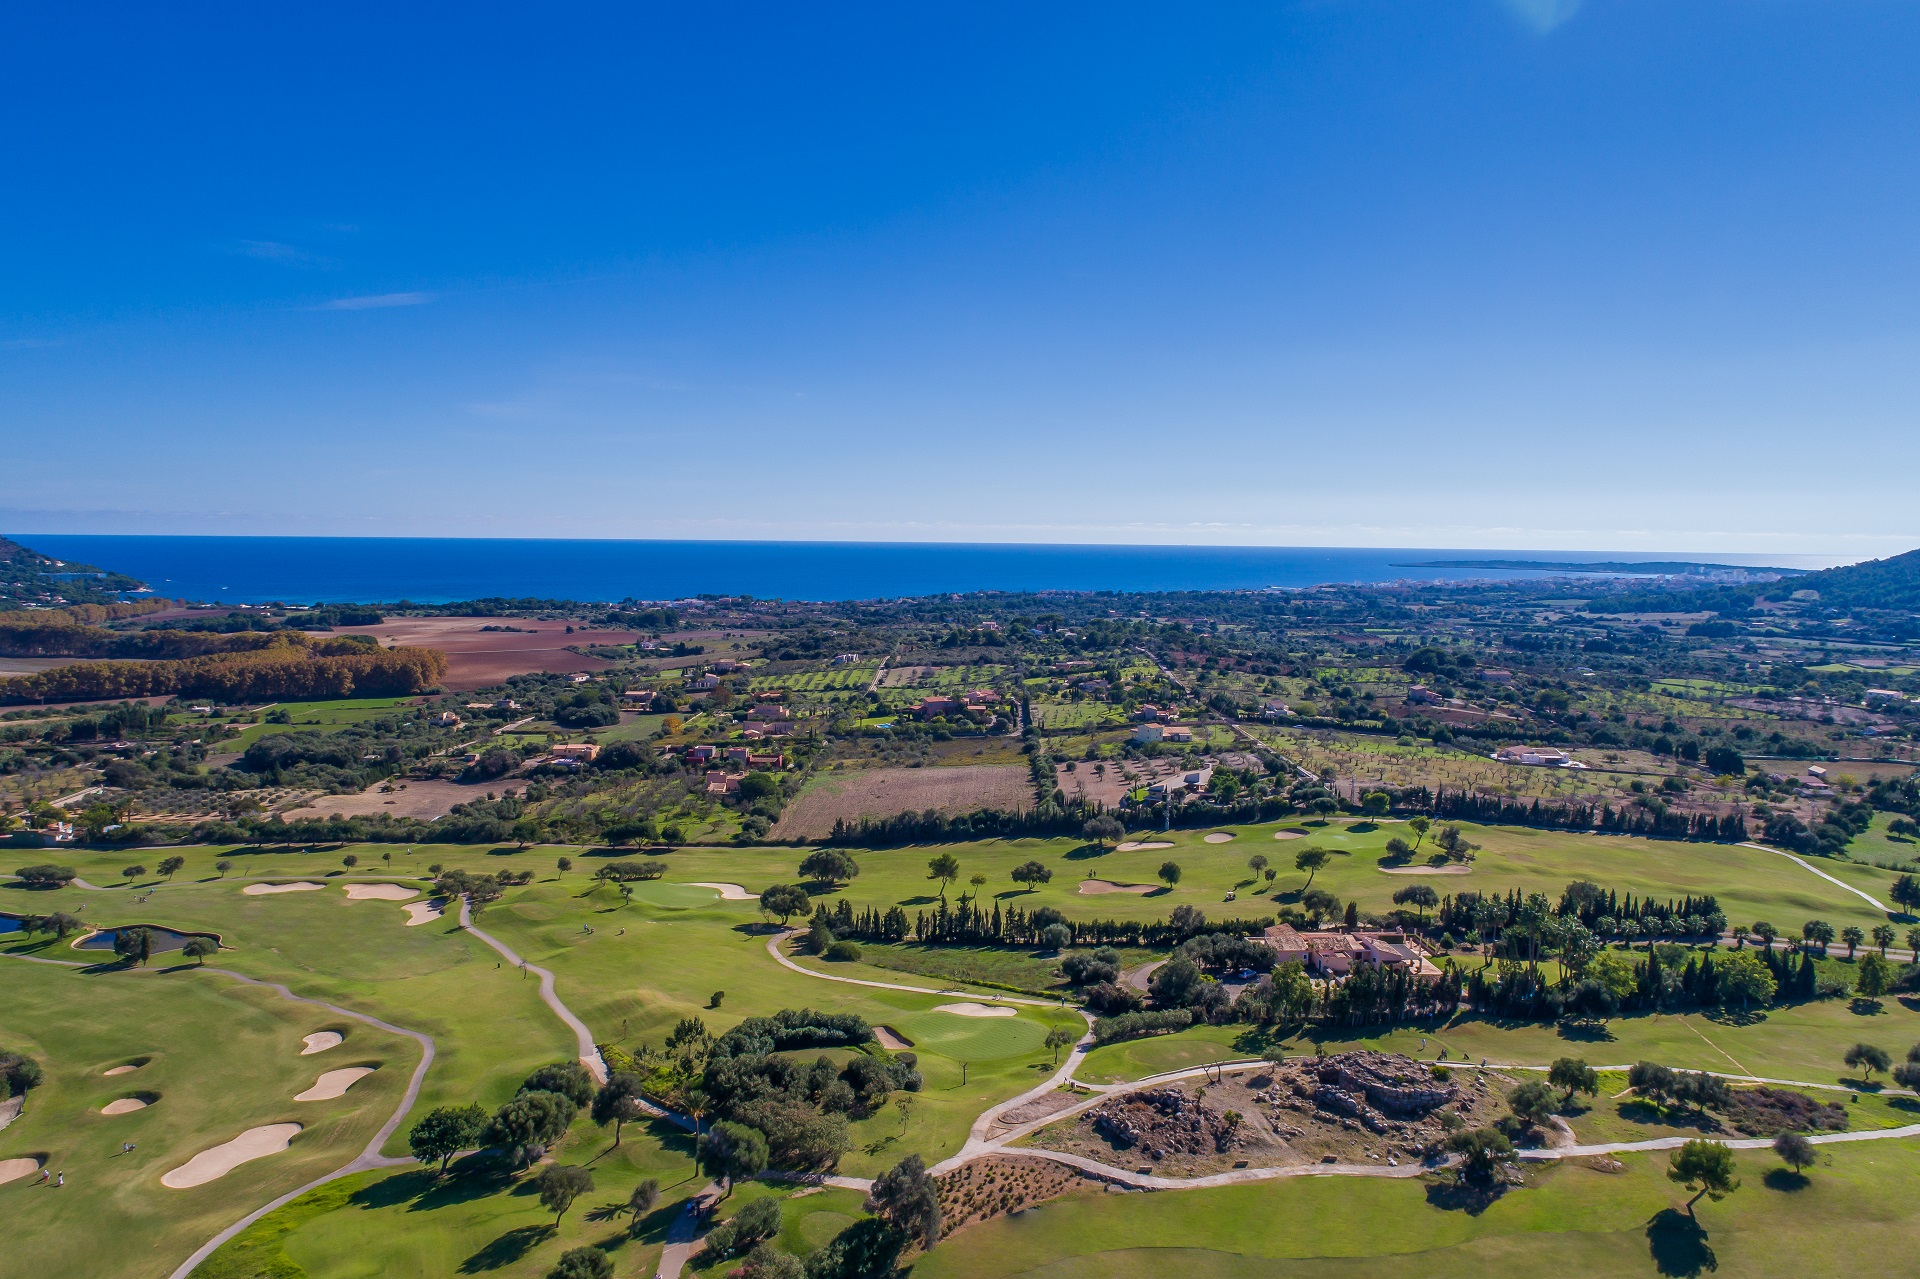 Pula Golf Resort Mallorca